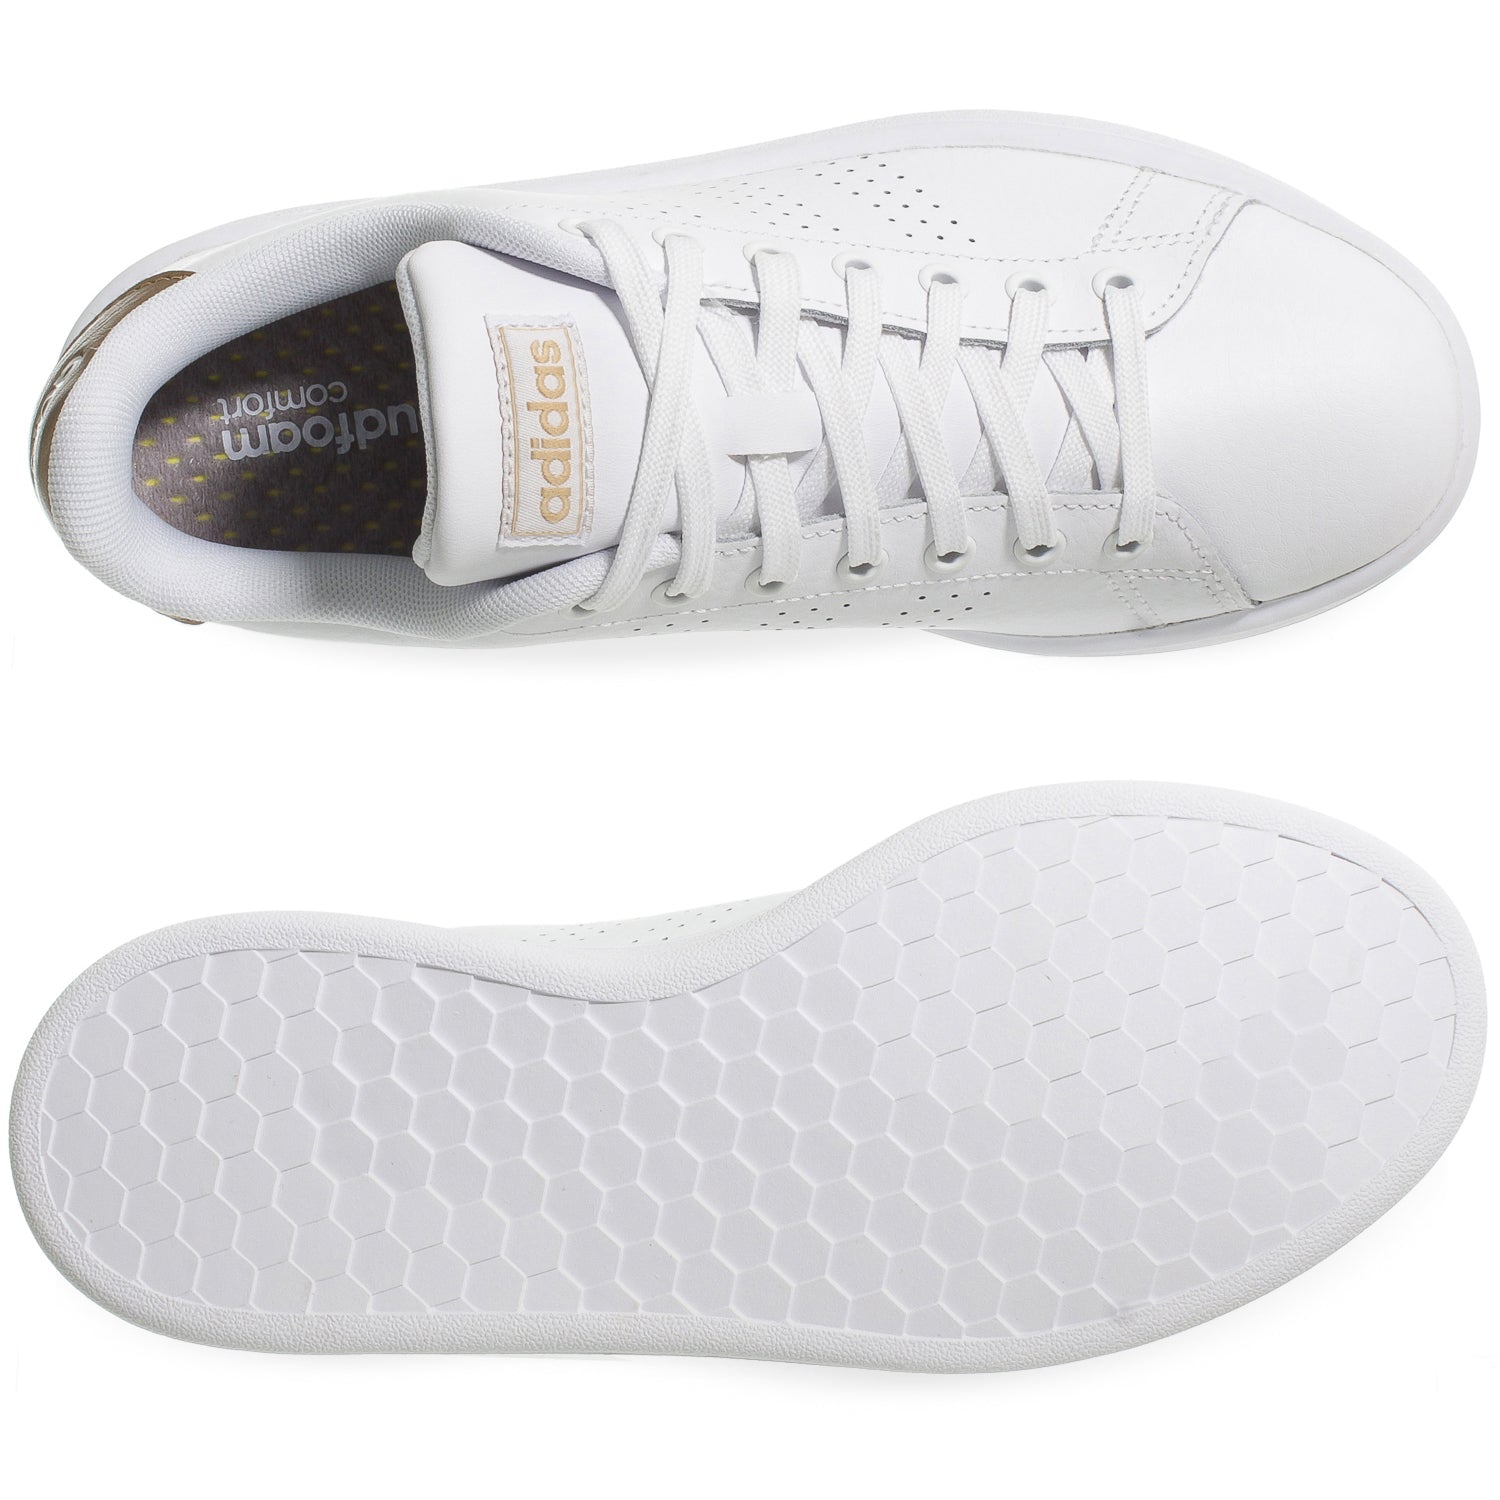 frotis Mal uso Tranquilidad Tenis Adidas Advantage W - F36223 - Blanco - Mujer | Shoelander.com -  Footwear Retail